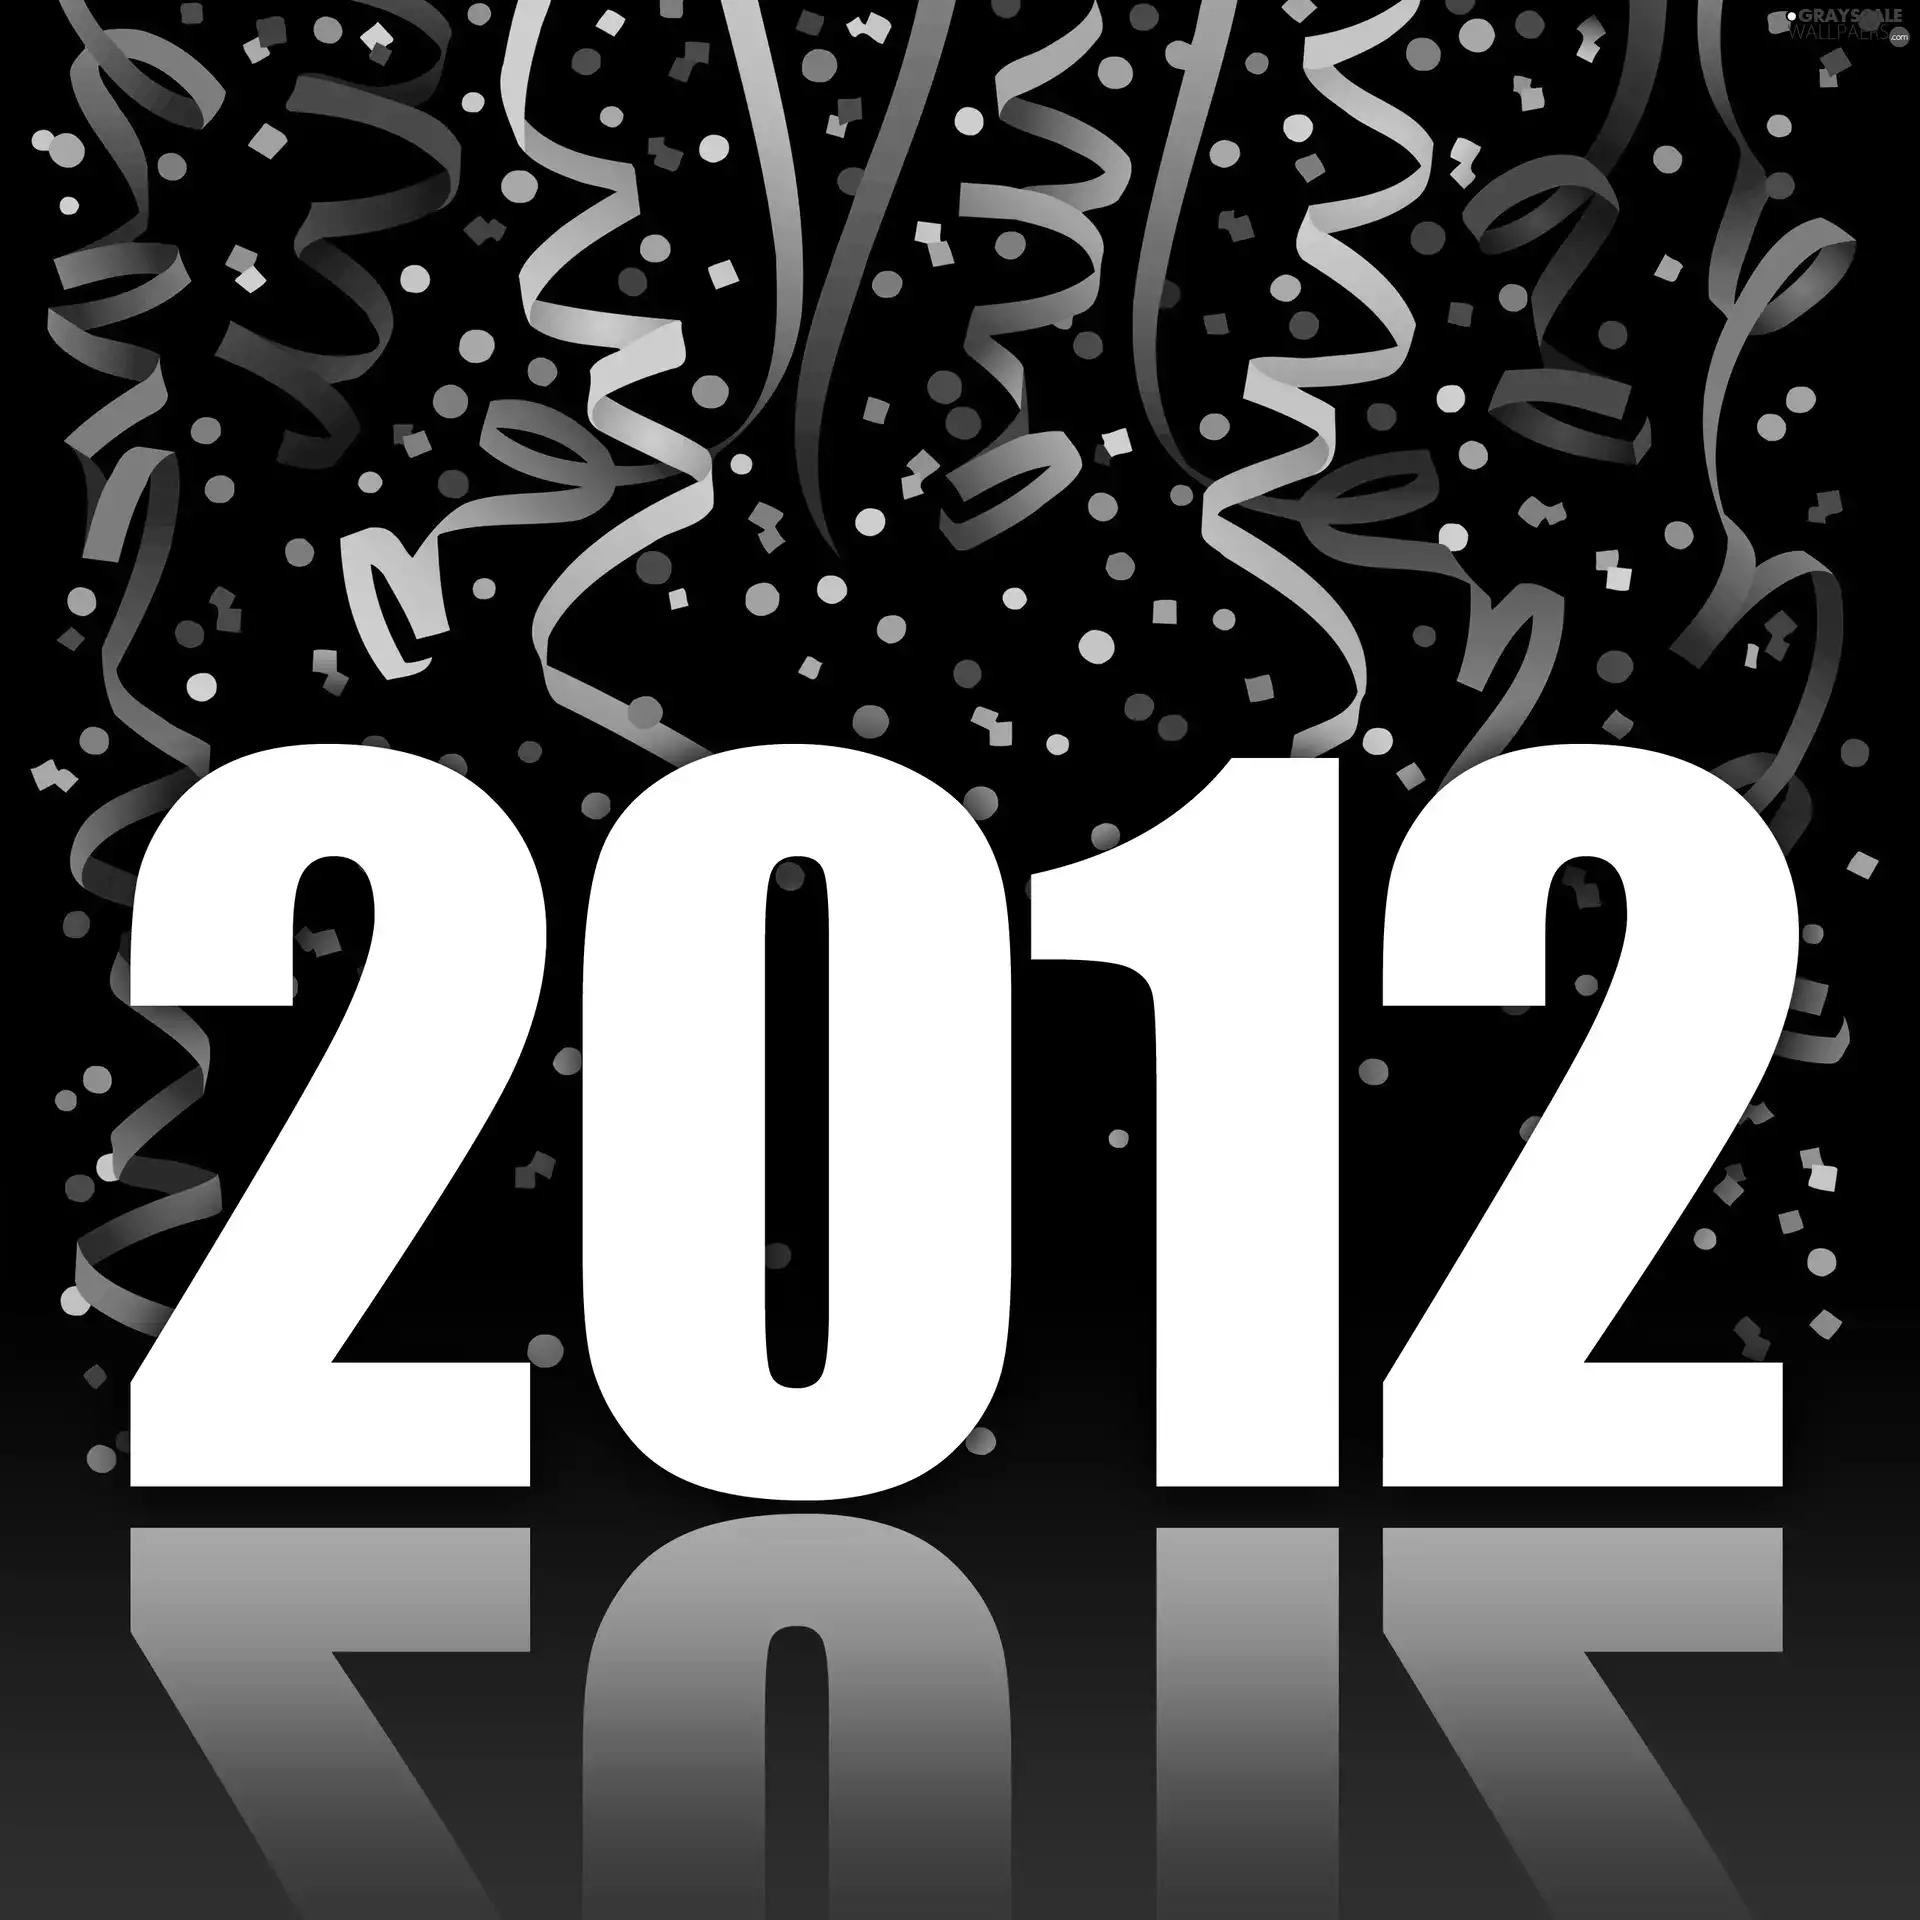 New Year, 2012